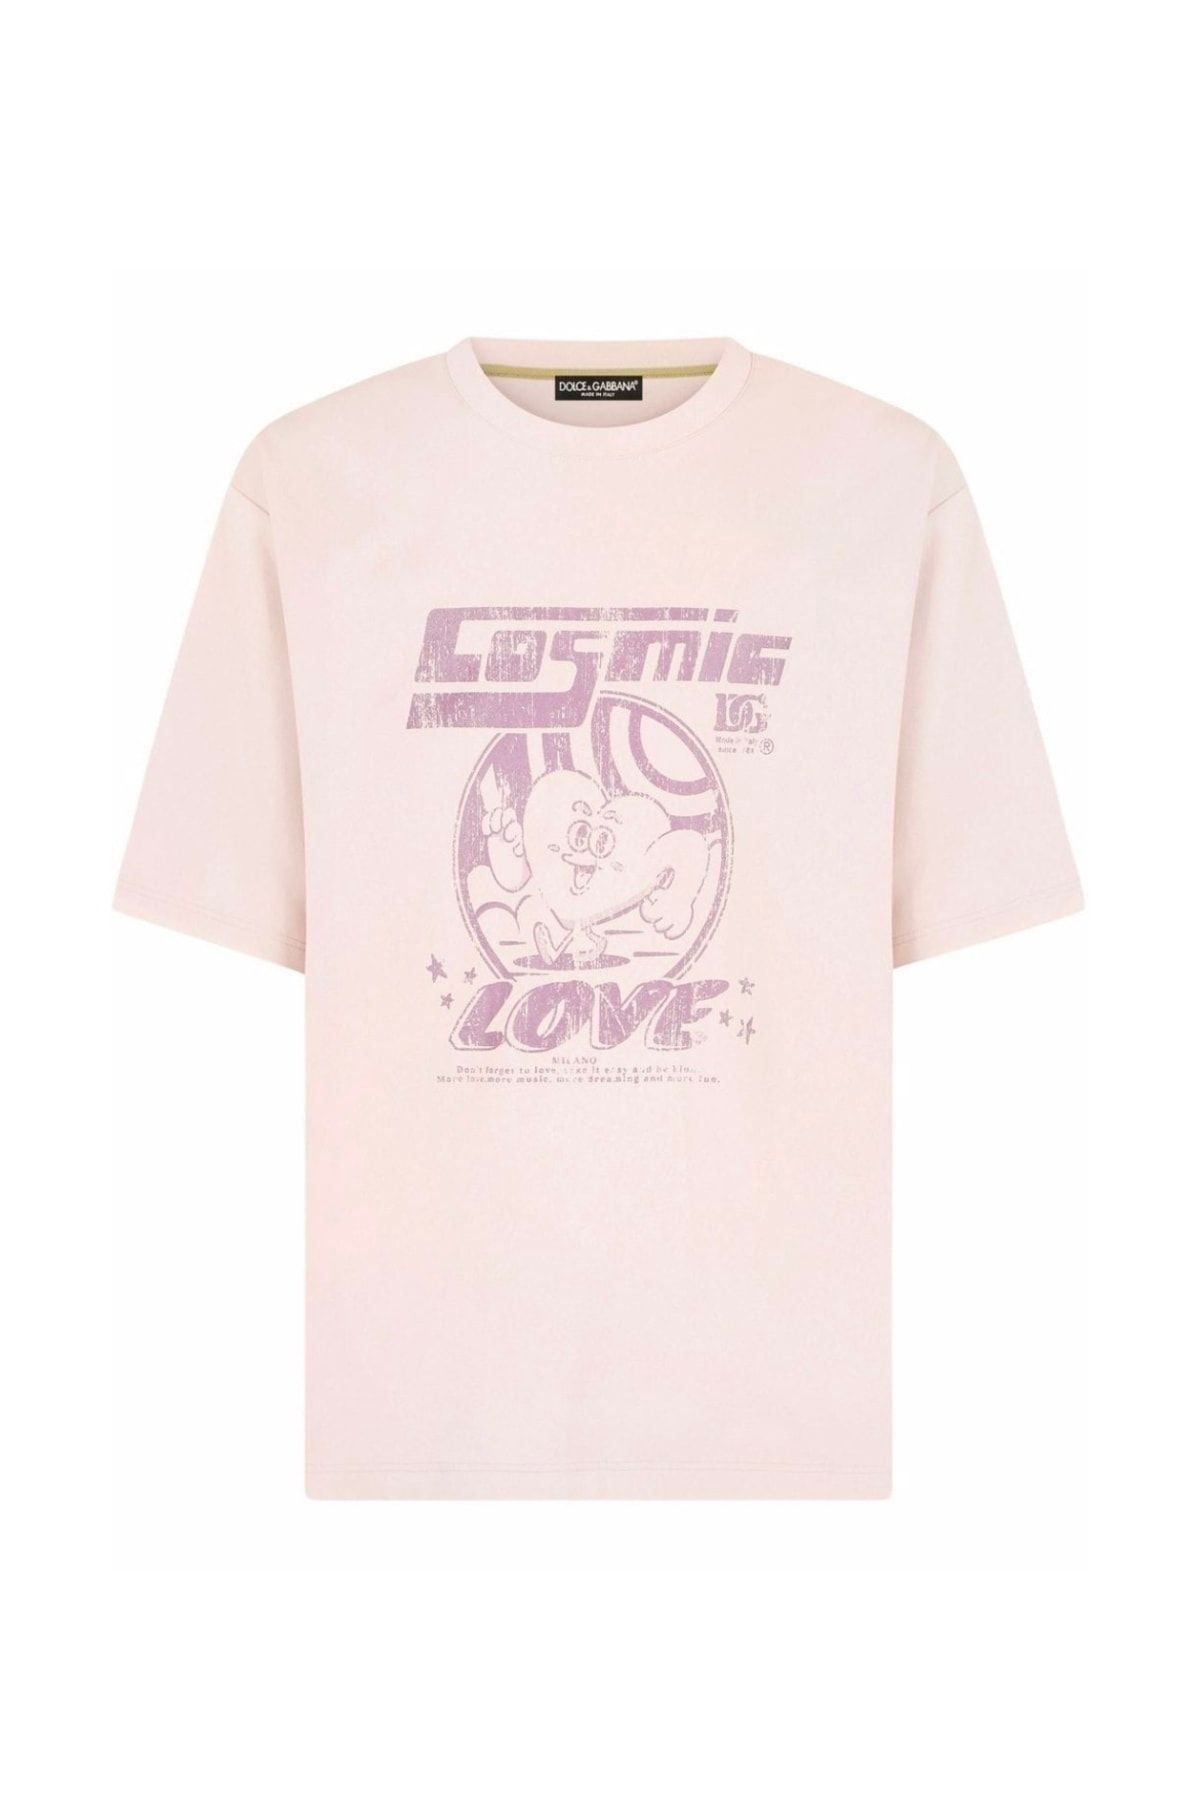 Dolce&Gabbana Cosmic Love Print T-shirt